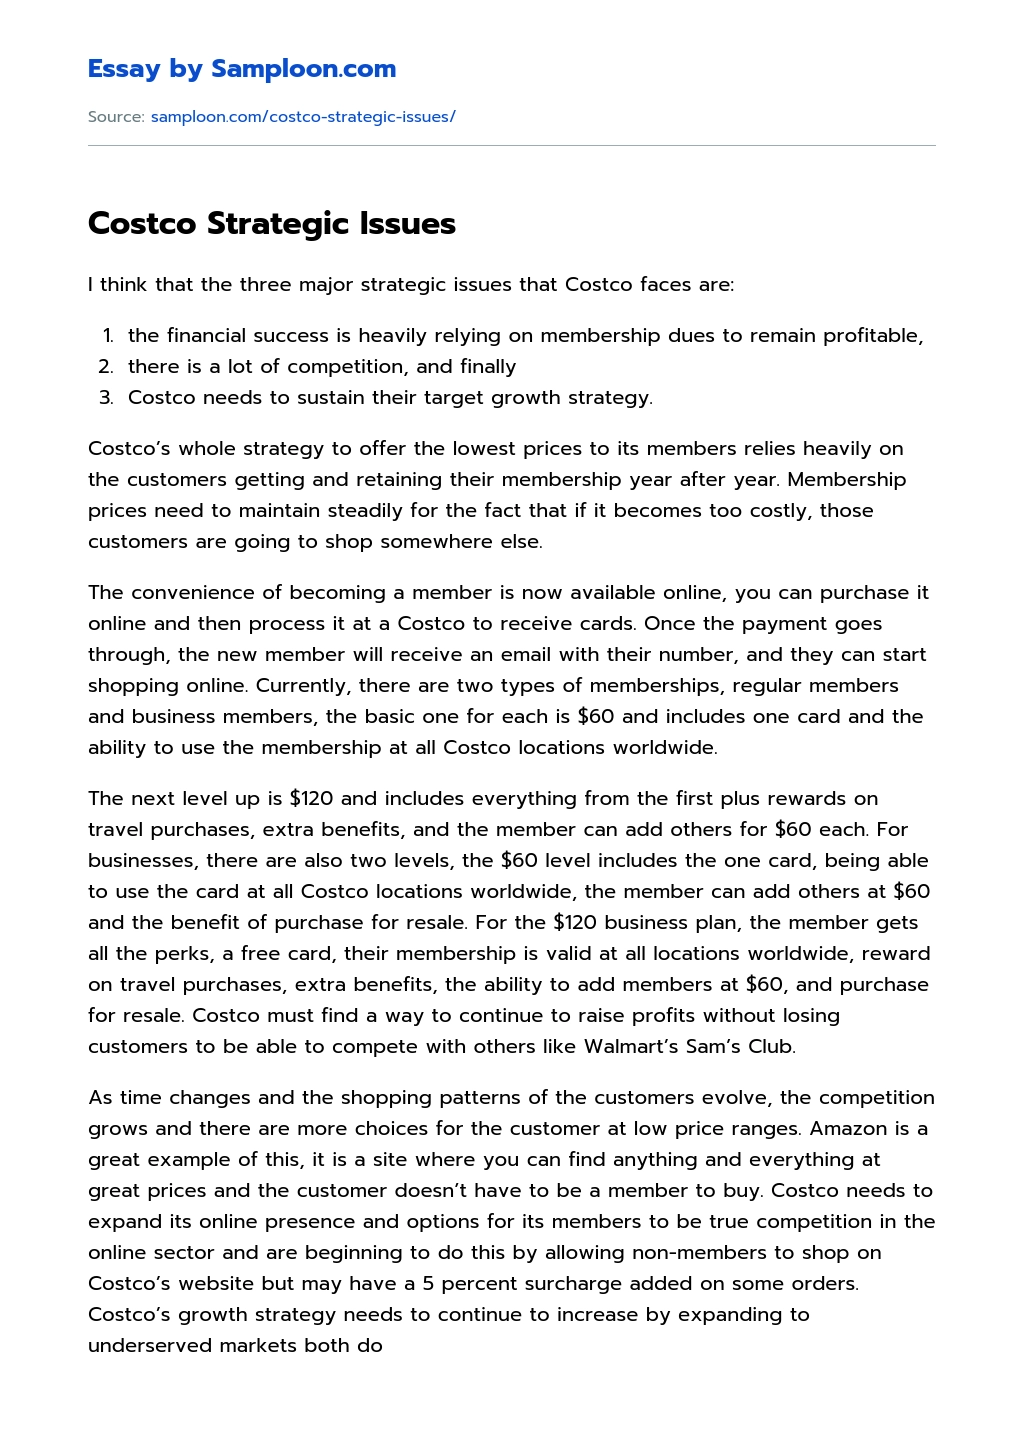 Costco Strategic Issues essay